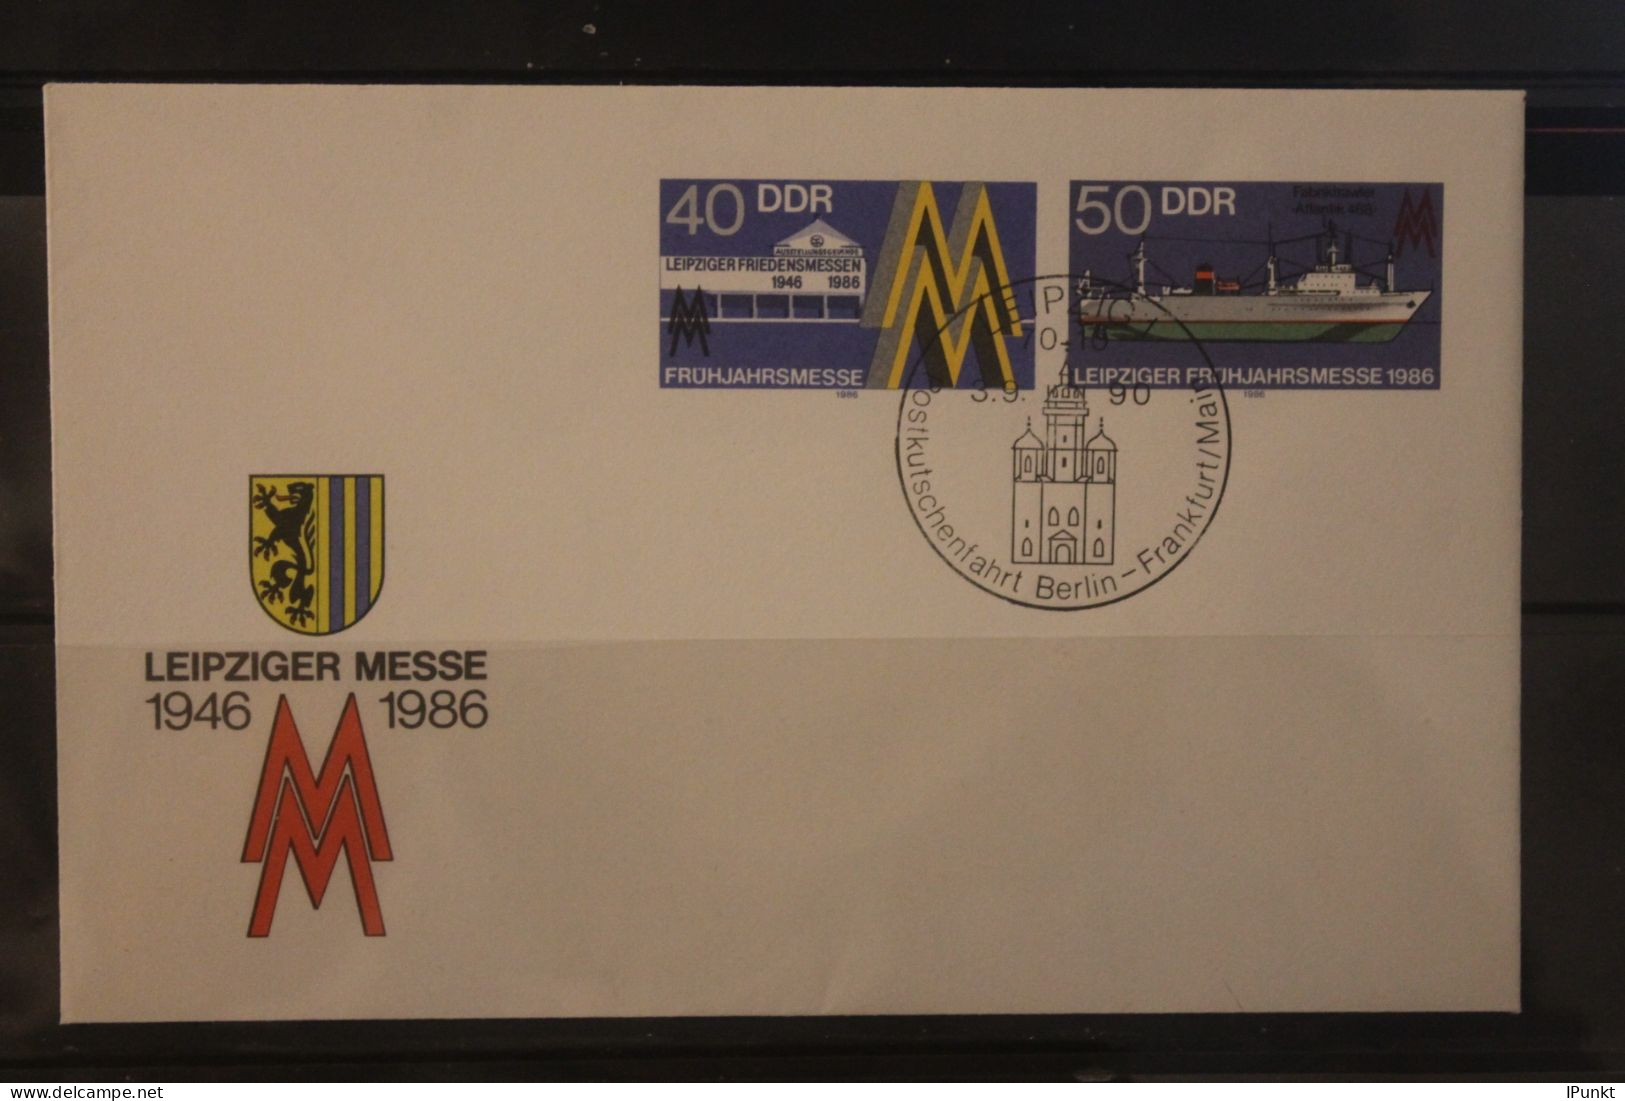 DDR 1986; Leipziger Messe 1986, U 4; SST Leipzig 1990 Postkutschenfahrt Berlin-Frankfurt/M. - Covers - Used